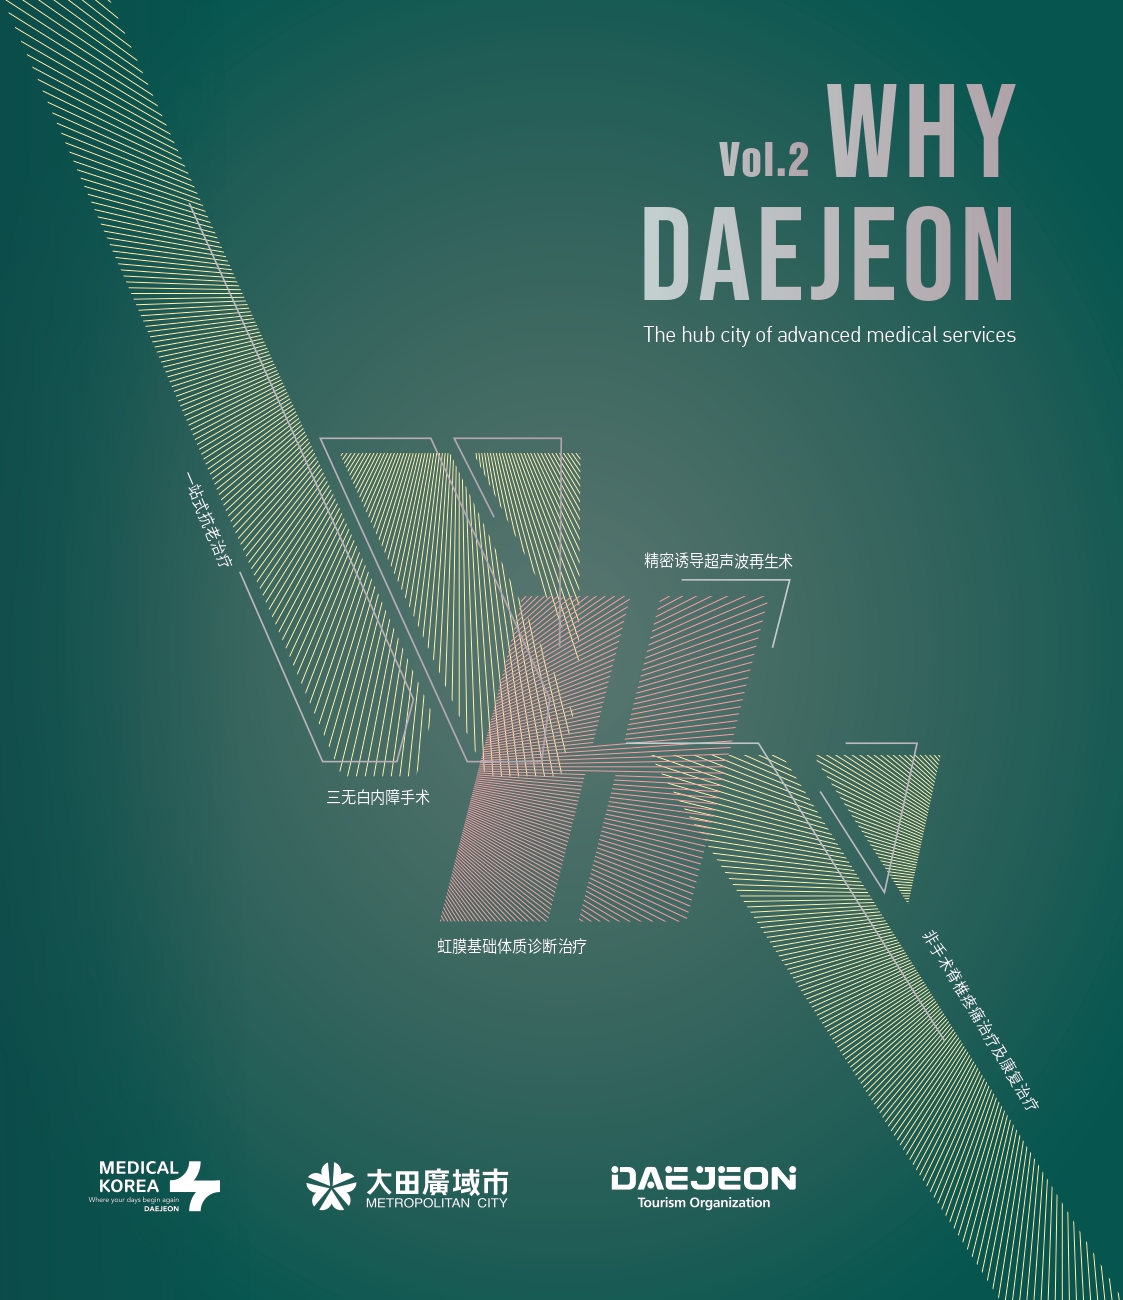 WHY DAEJEON Vol.2 大田广域市特色医疗商品